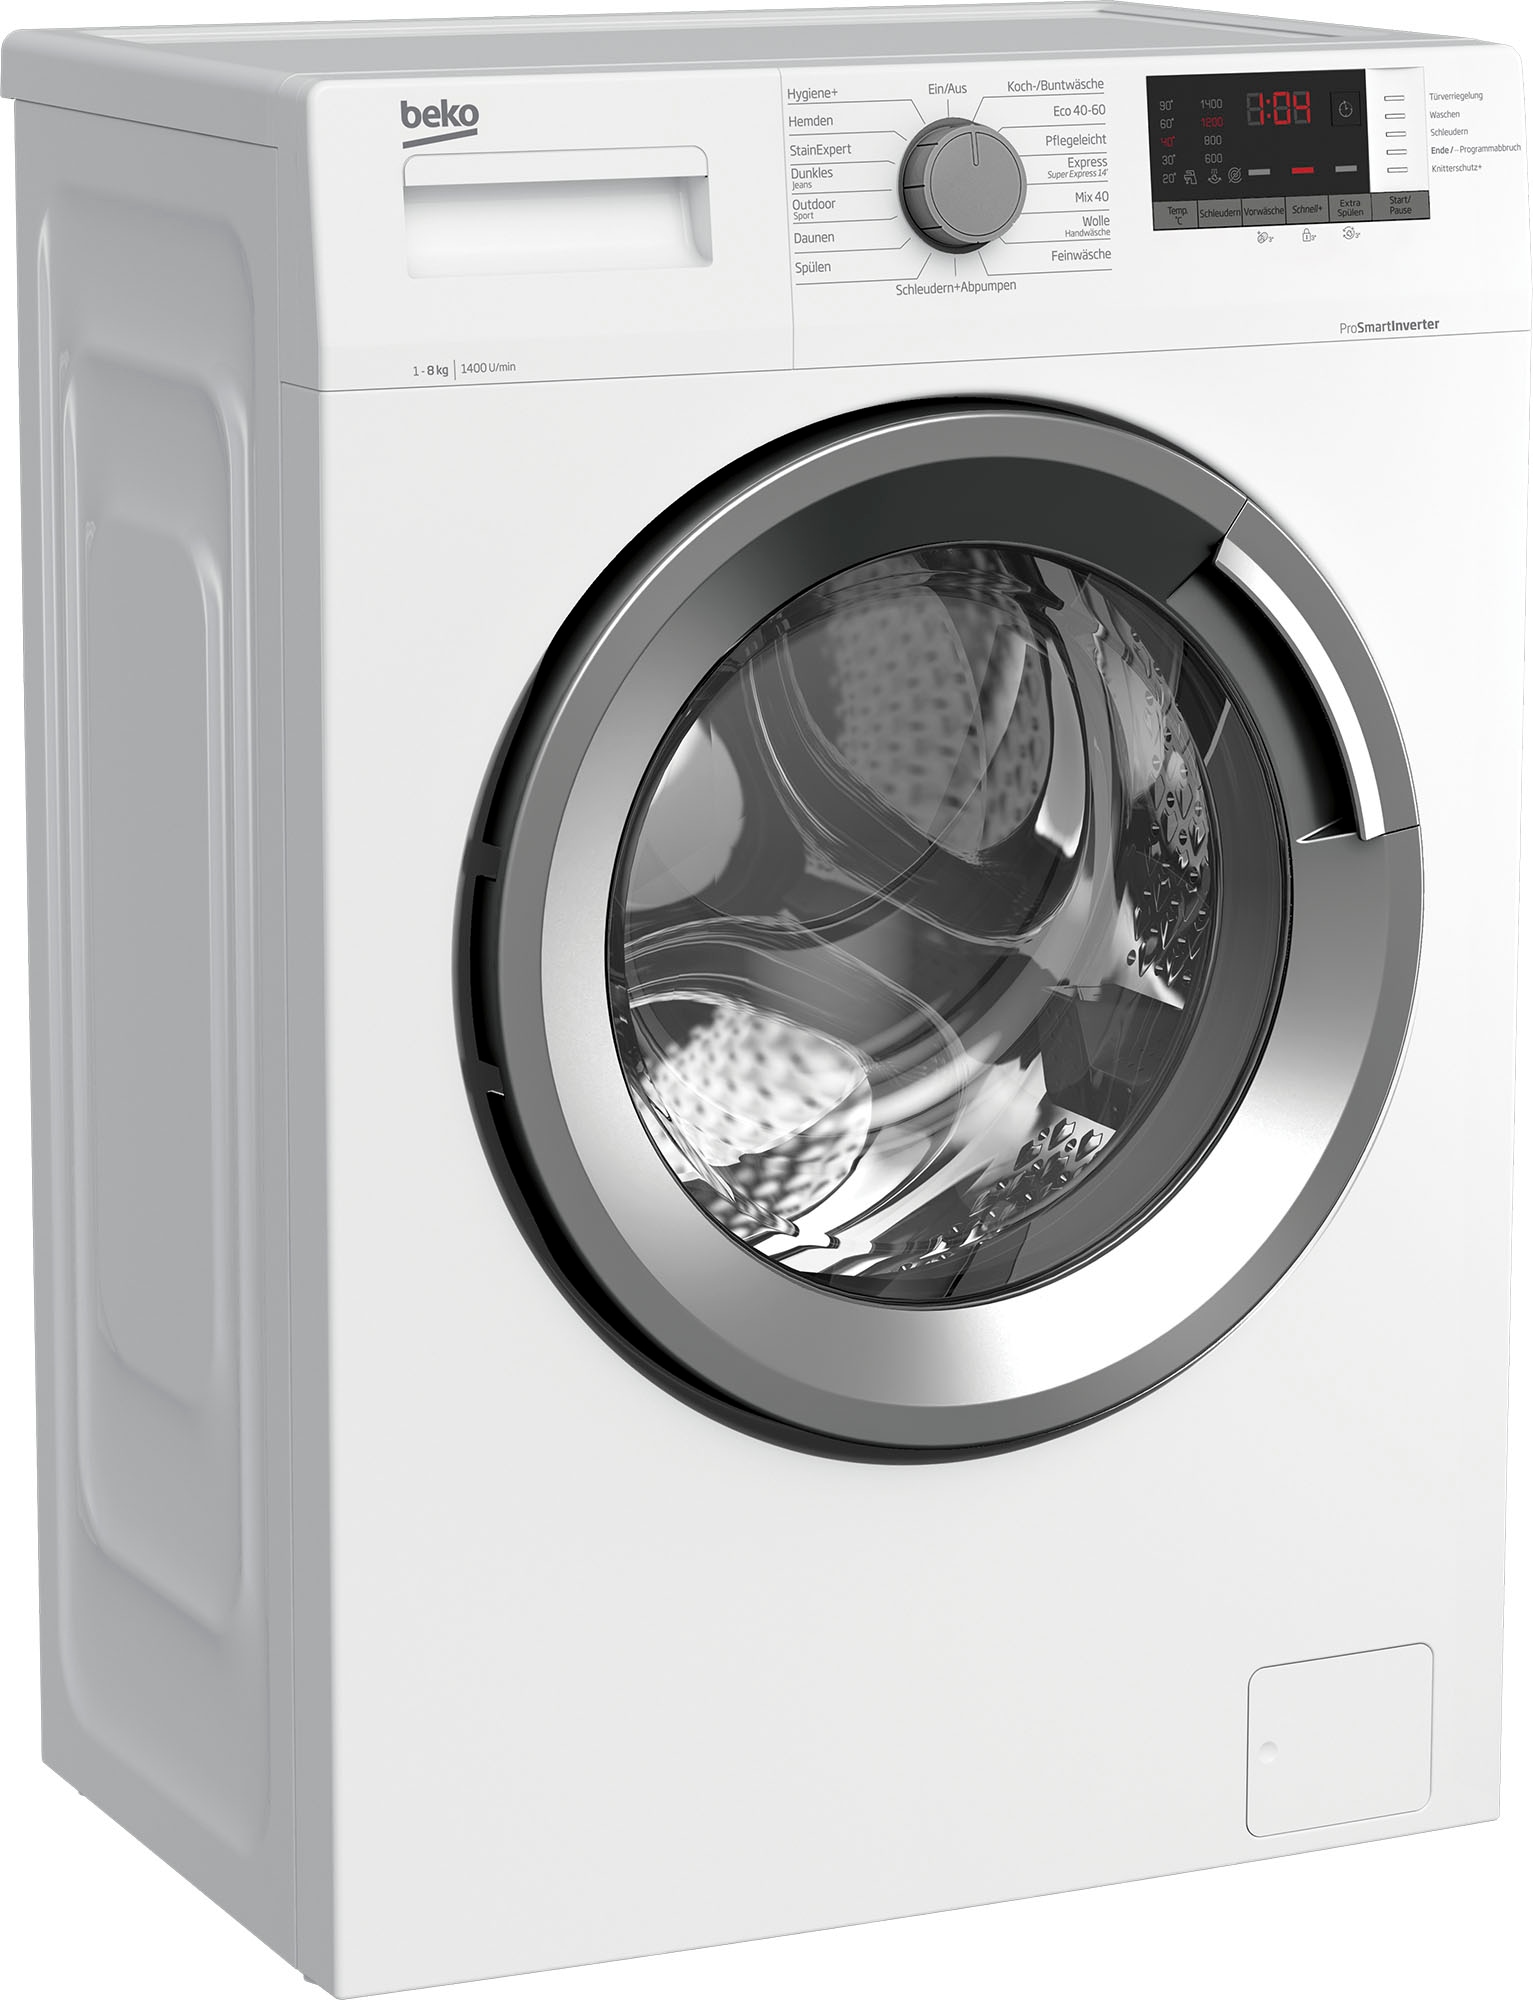 BEKO Waschmaschine »WMO822A«, WMO822A U/min Shop 1400 kg, im 8 jetzt OTTO 7001440096, Online